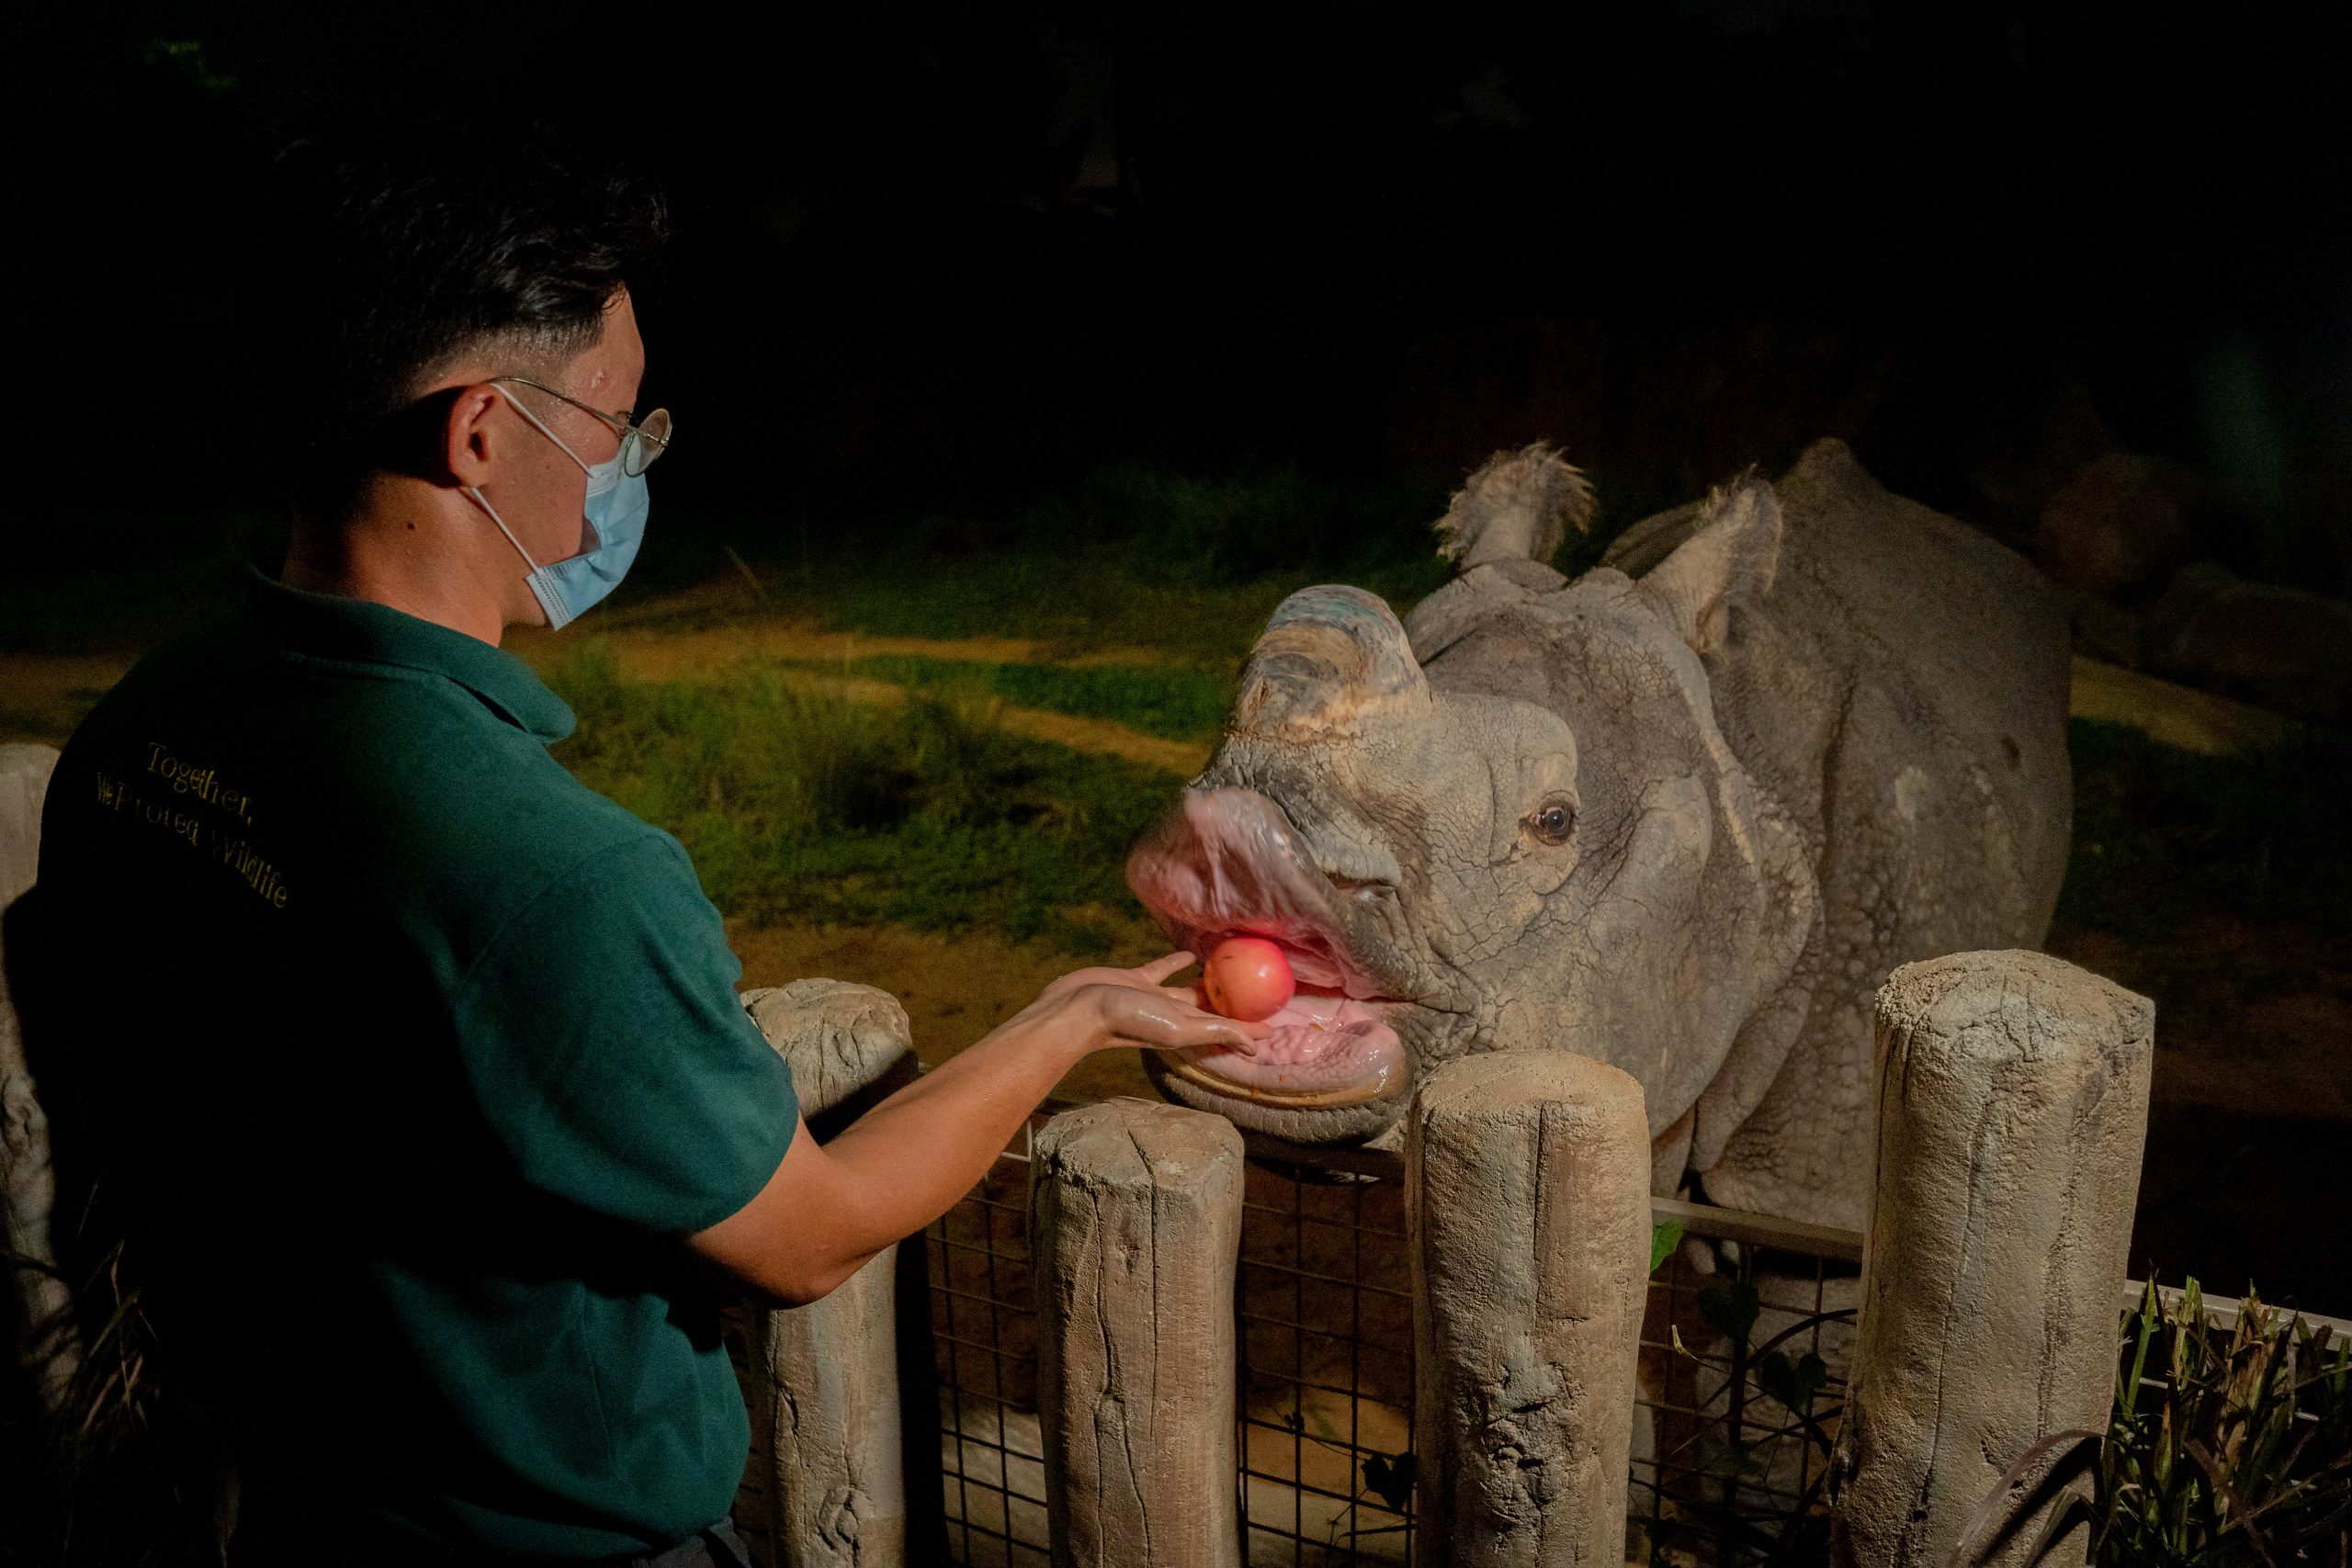 Image 3 – Night Safari’s Senior Keeper, Gao Hui, feeds an apple to Newari. Photo credit to Mandai Wildlife Group